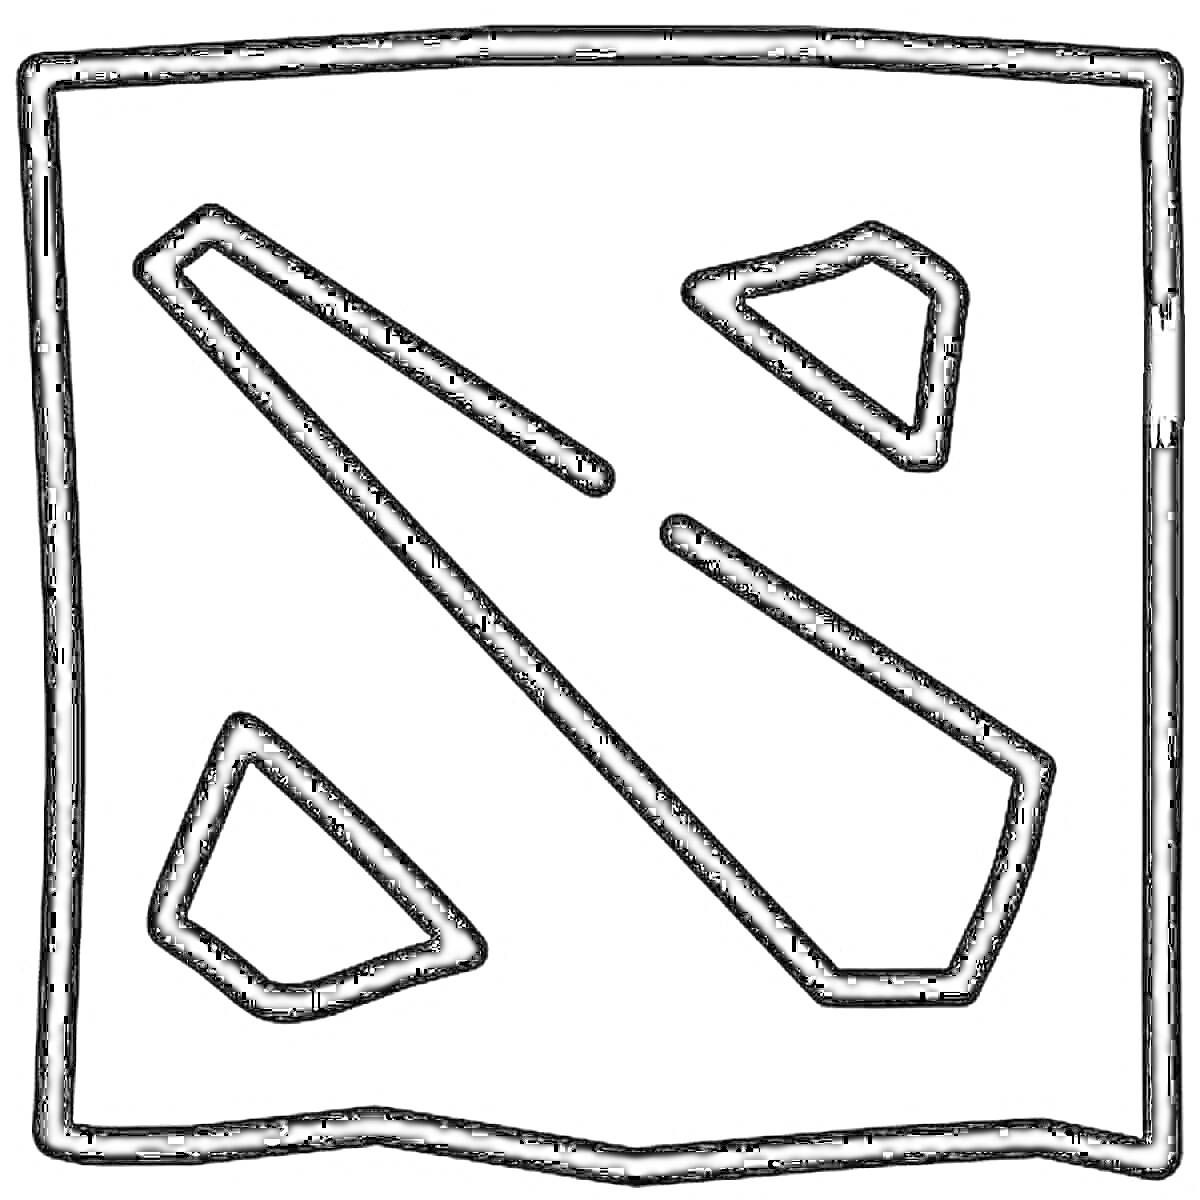 Раскраска Логотип DotA 2 с тремя геометрическими фигурами на квадратном фоне